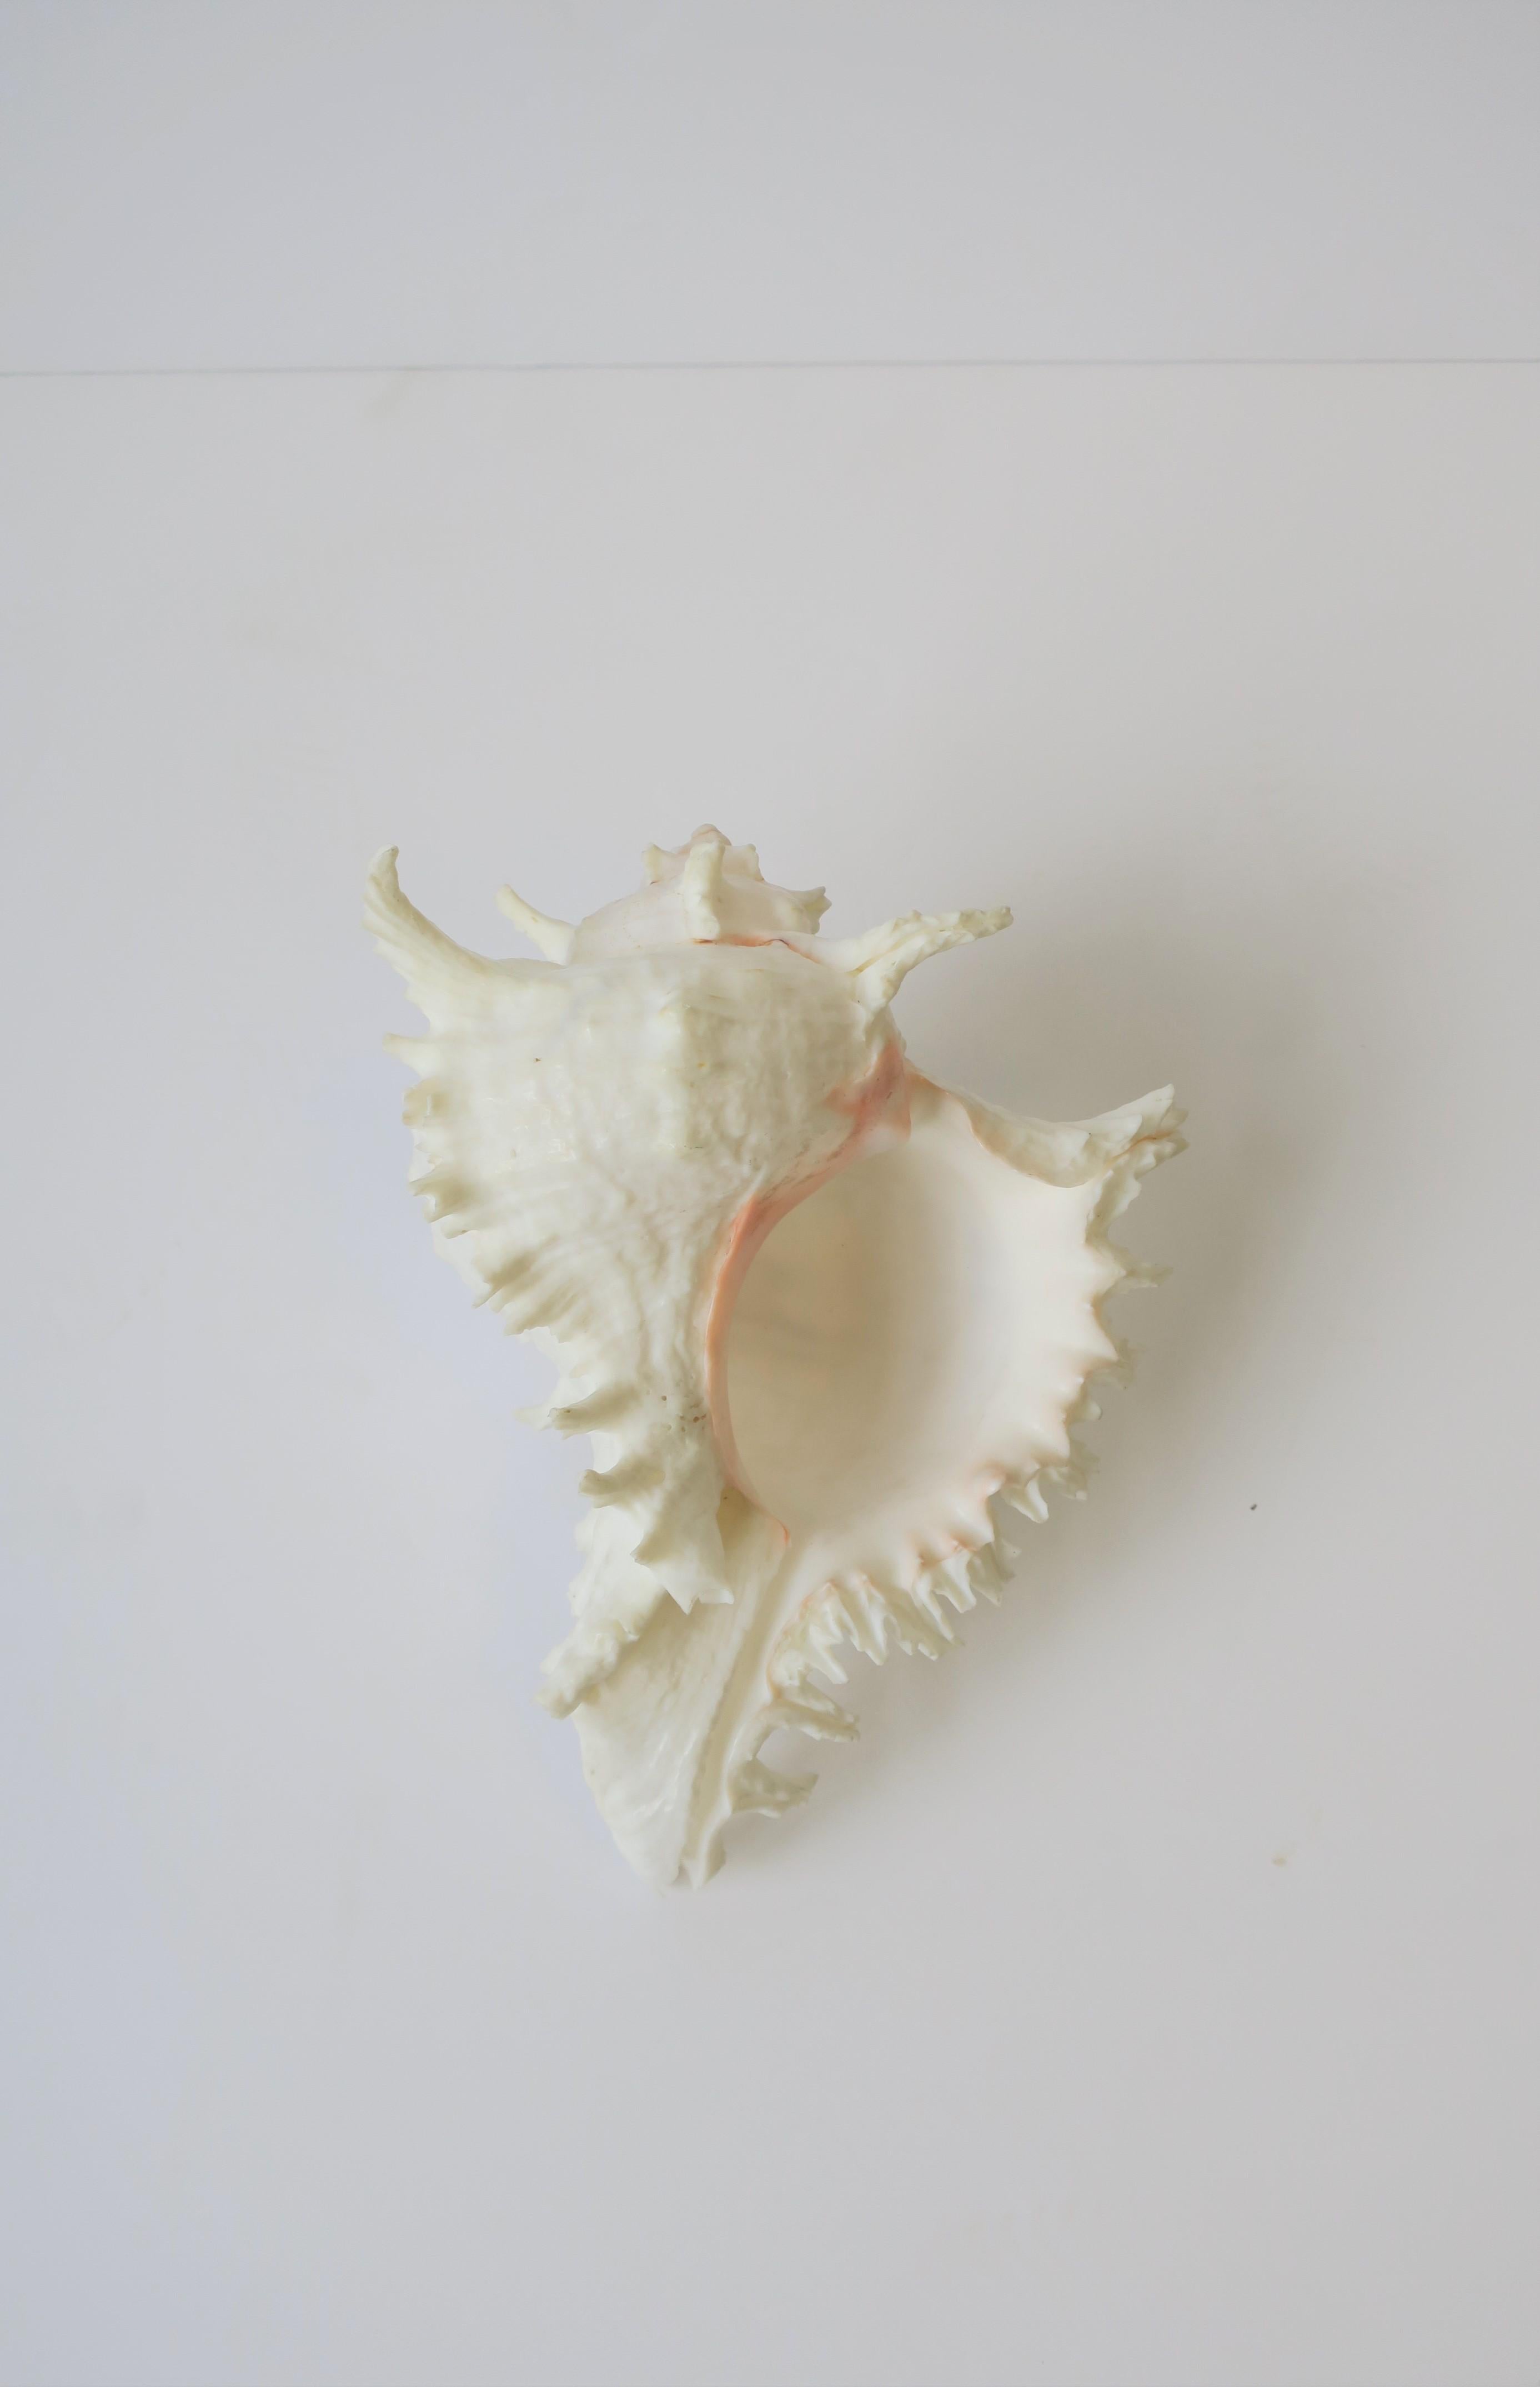 white sea shell